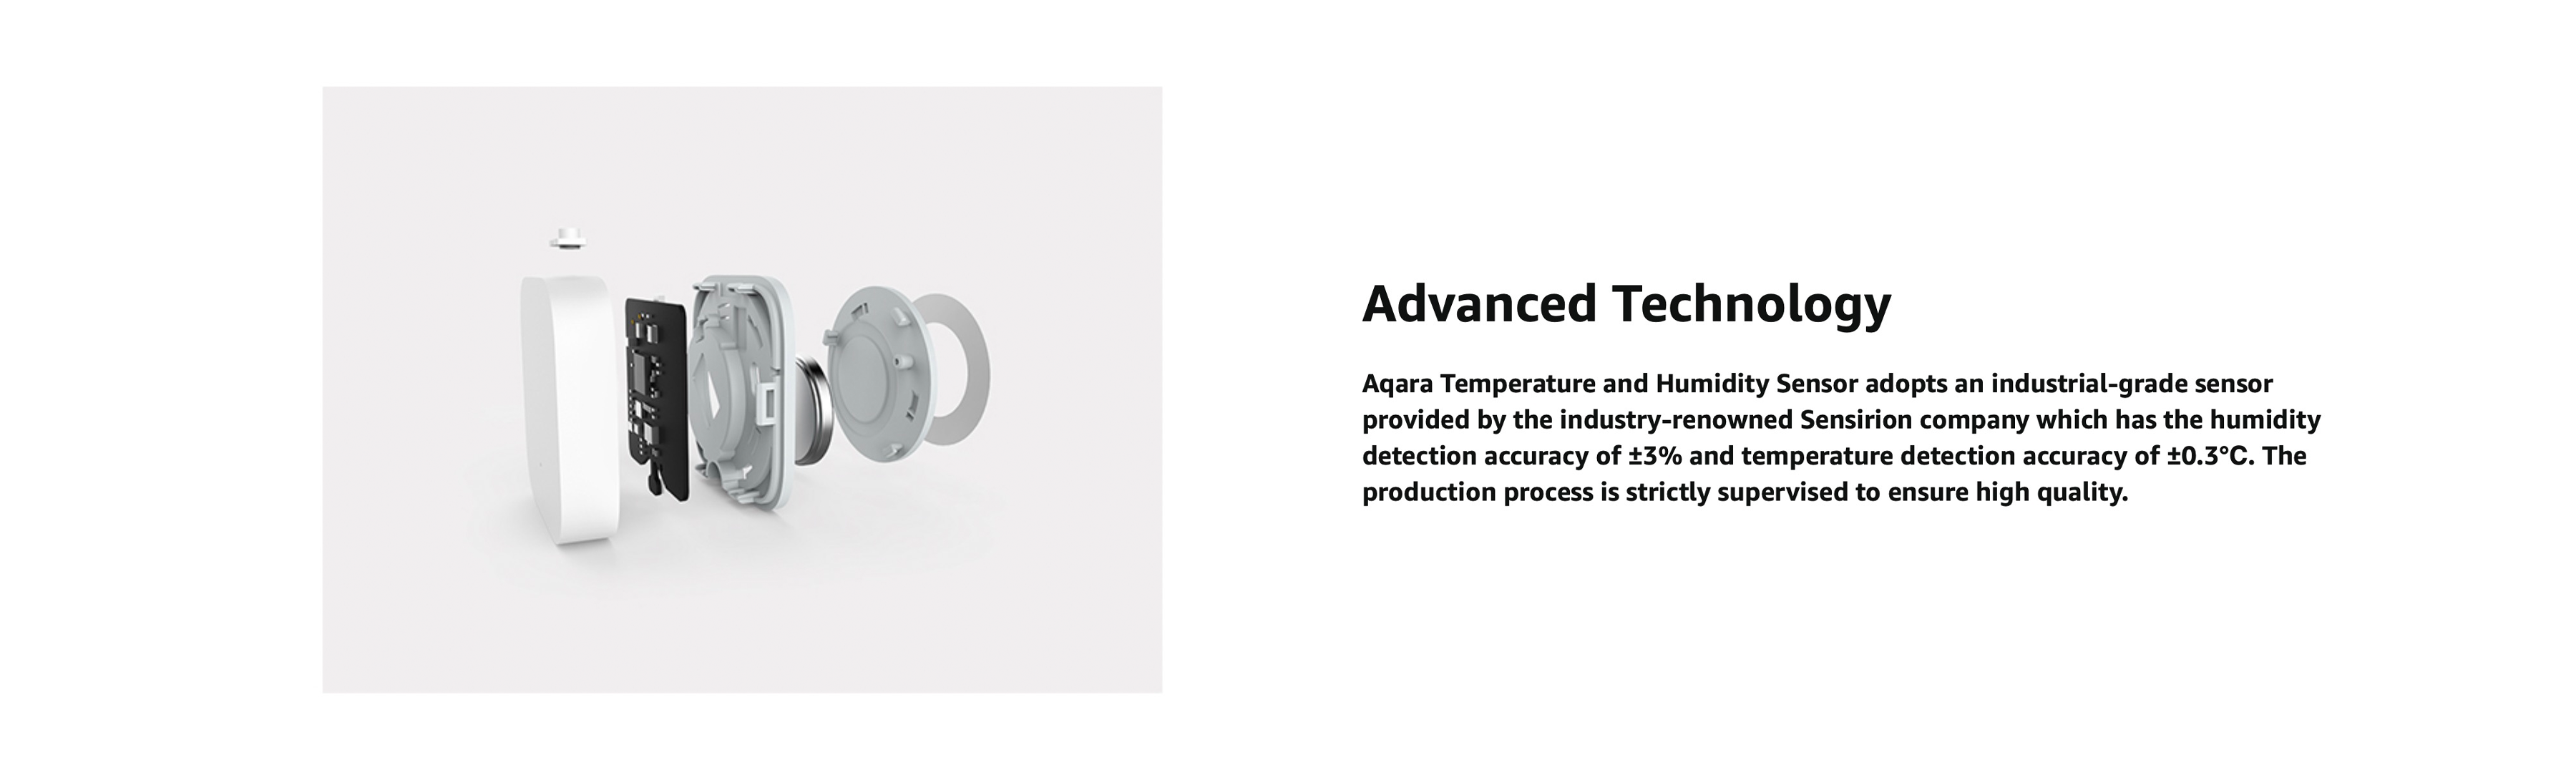 Aqara Temperature and Humidity Sensor